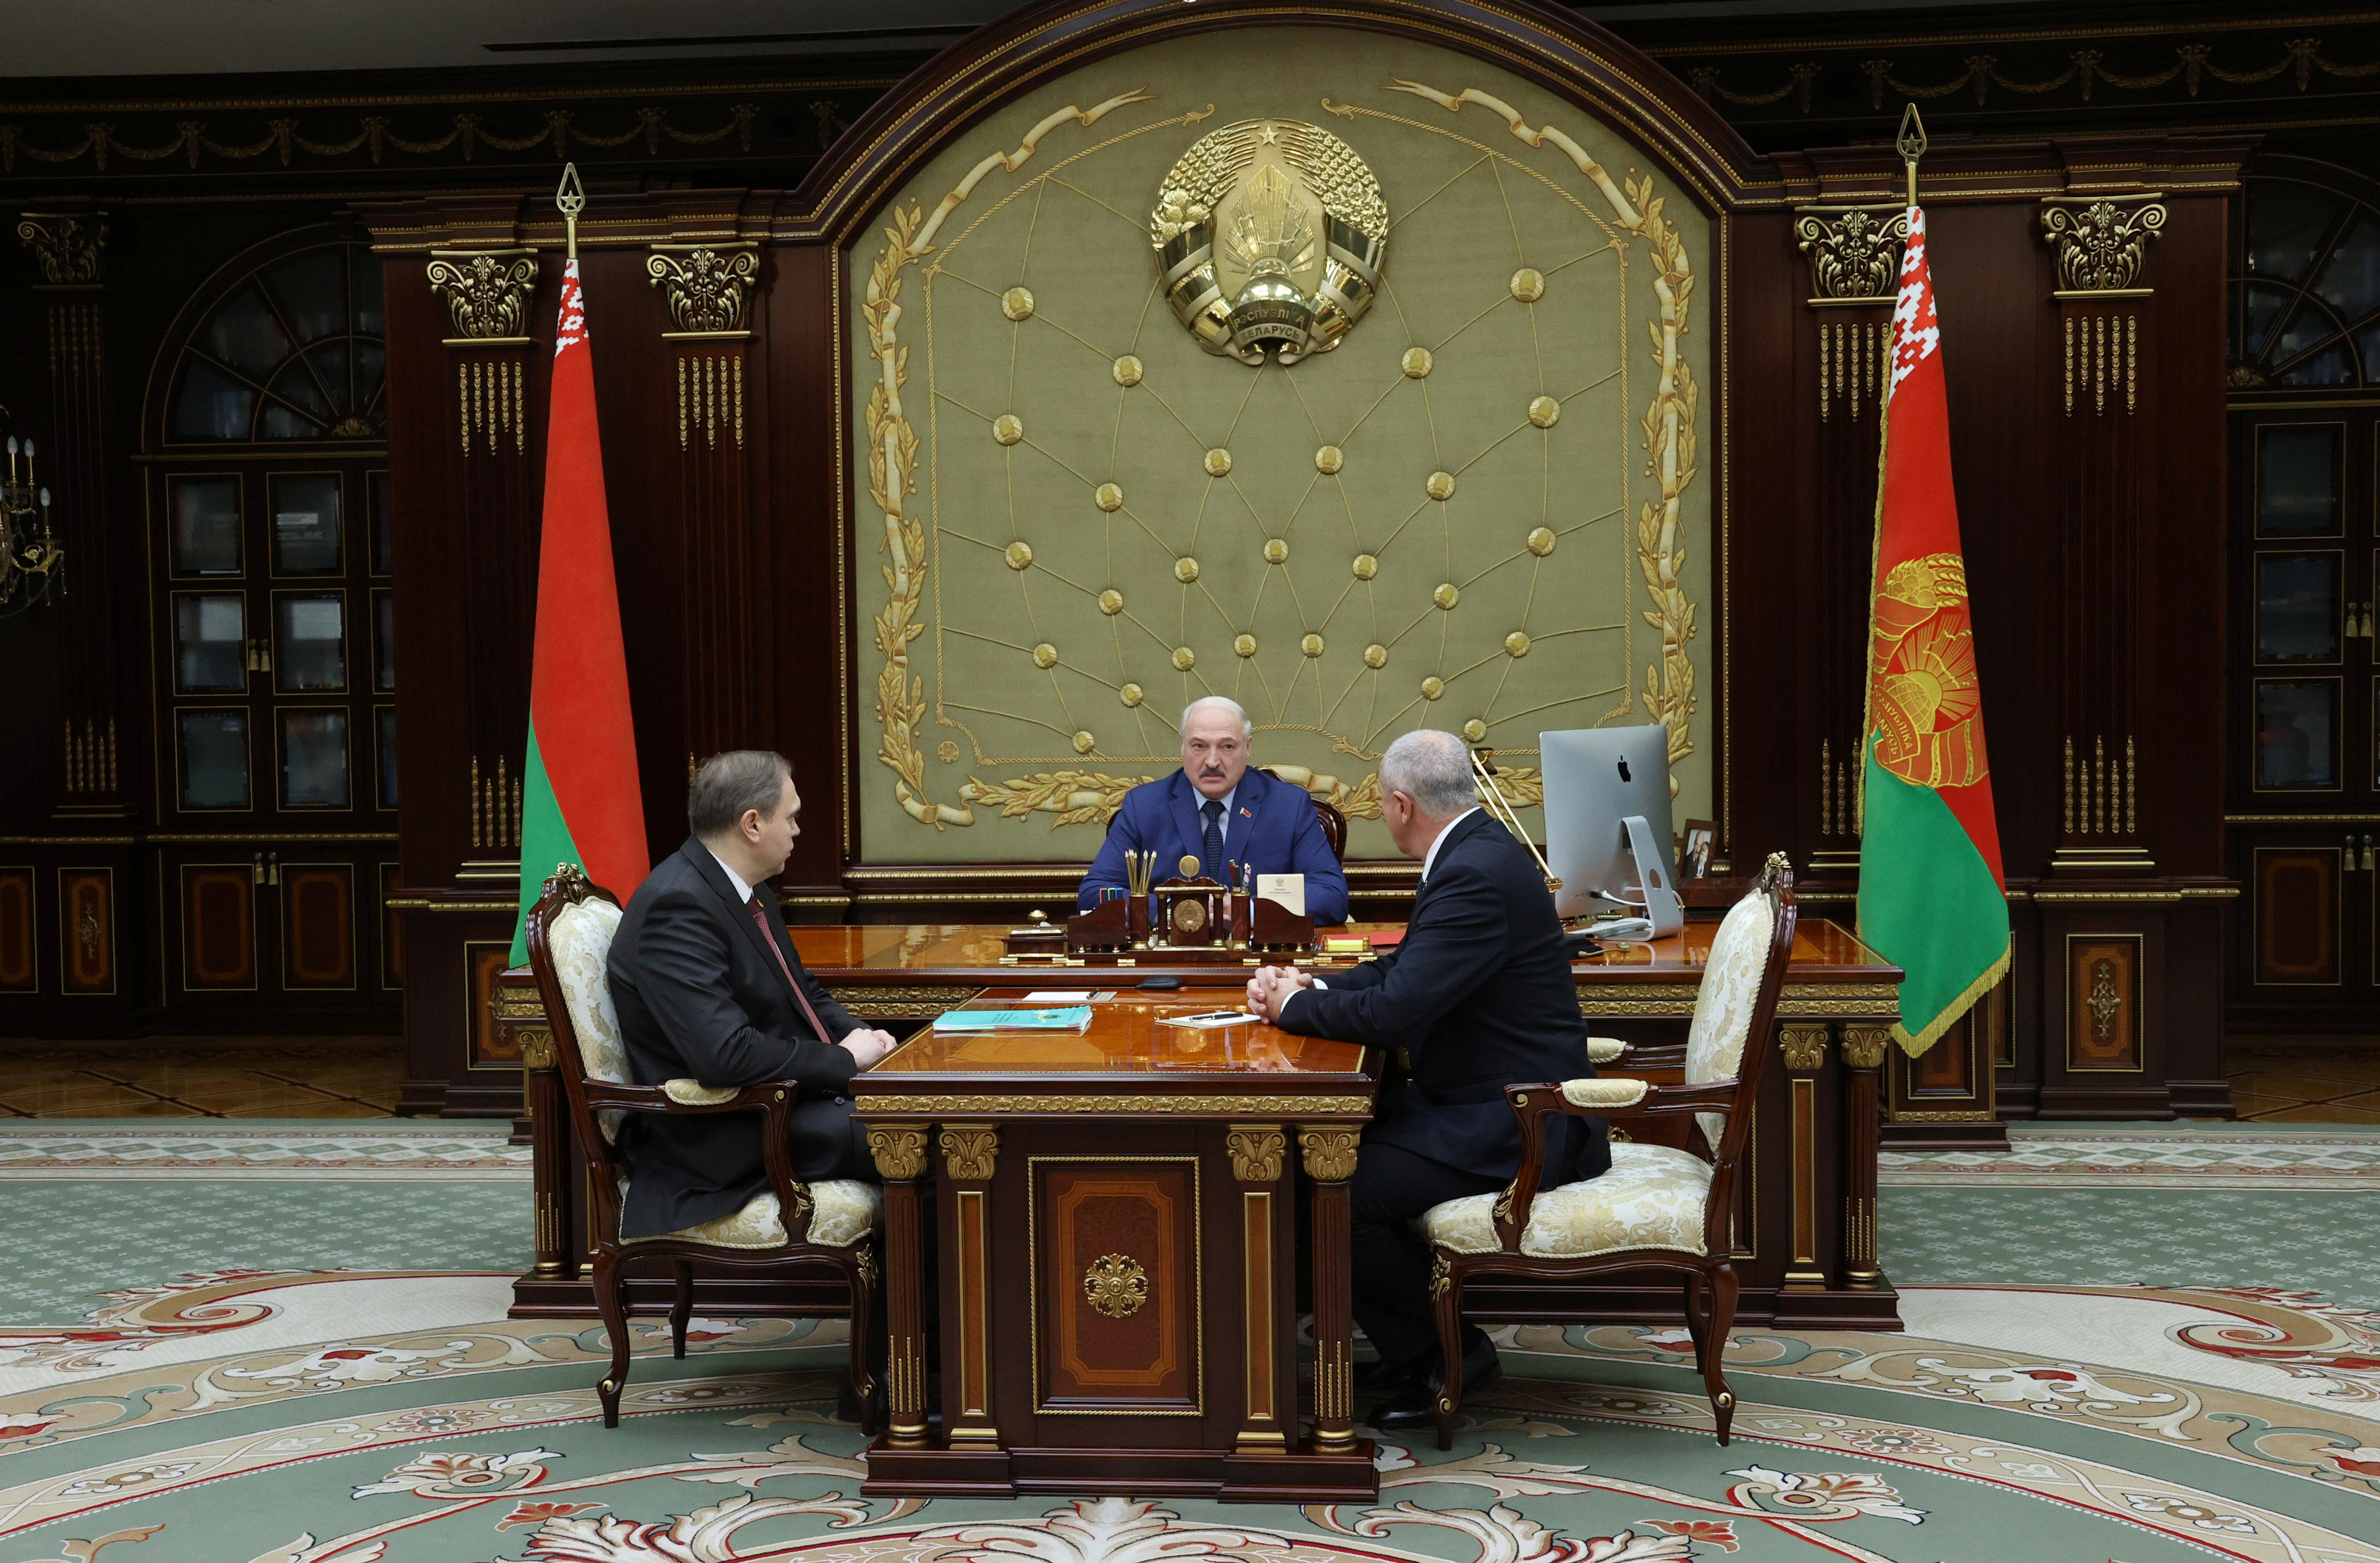 Belarusian President Alexander Lukashenko attends a meeting in Minsk